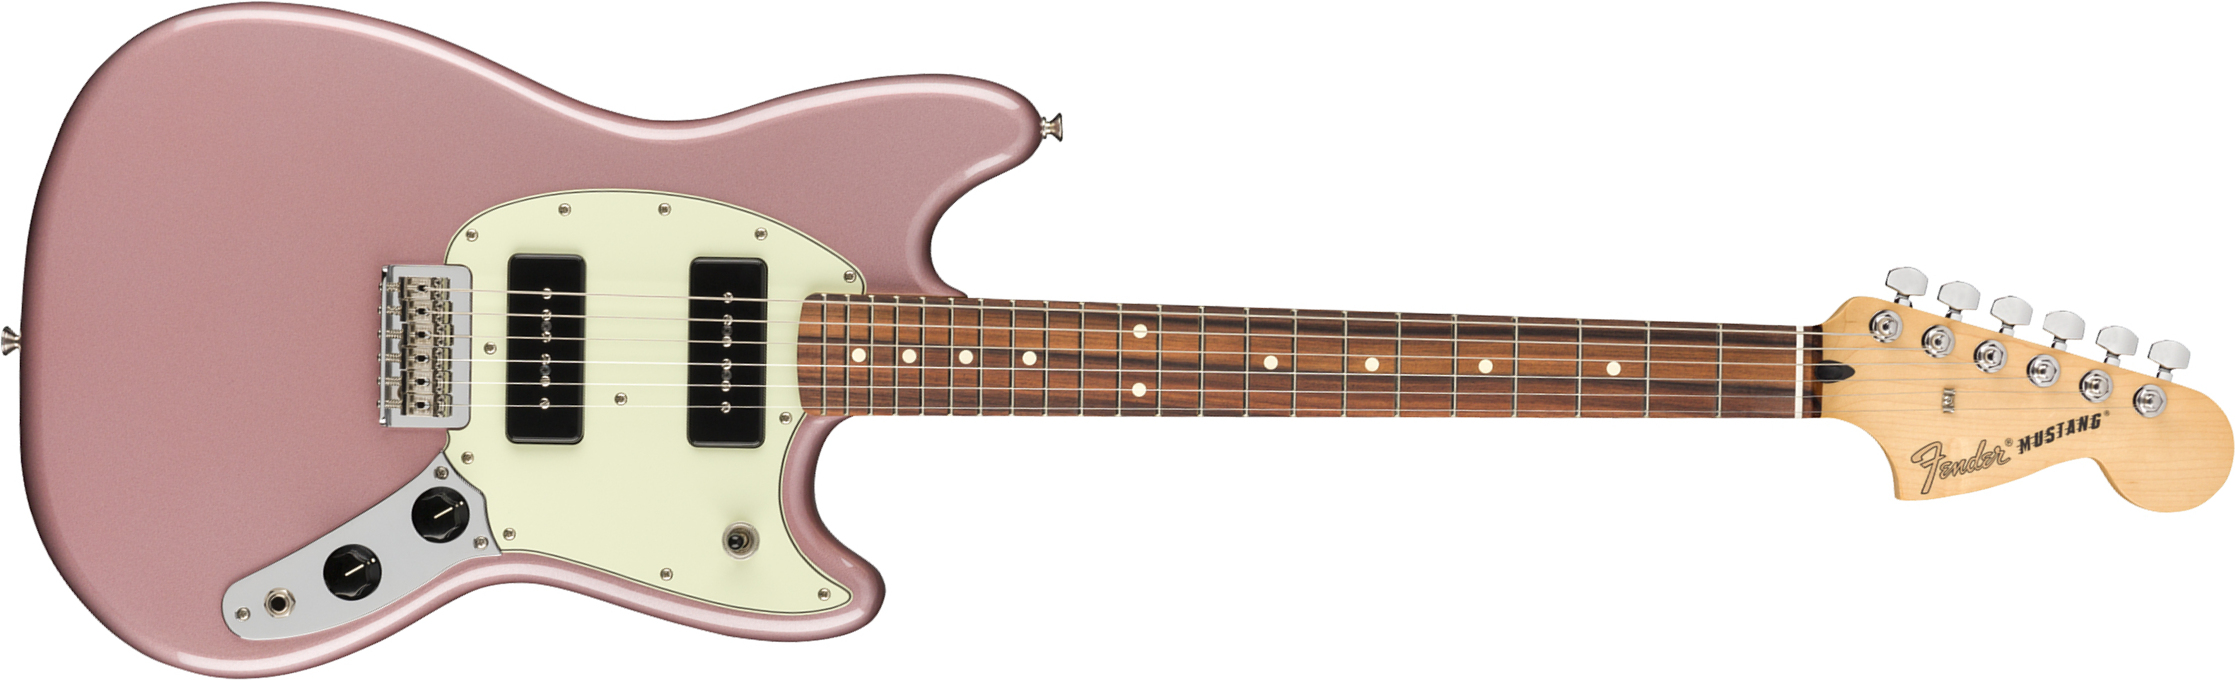 Fender Mustang Player 90 Mex Ht 2p90 Pf - Burgundy Mist Metallic - Guitarra electrica retro rock - Main picture